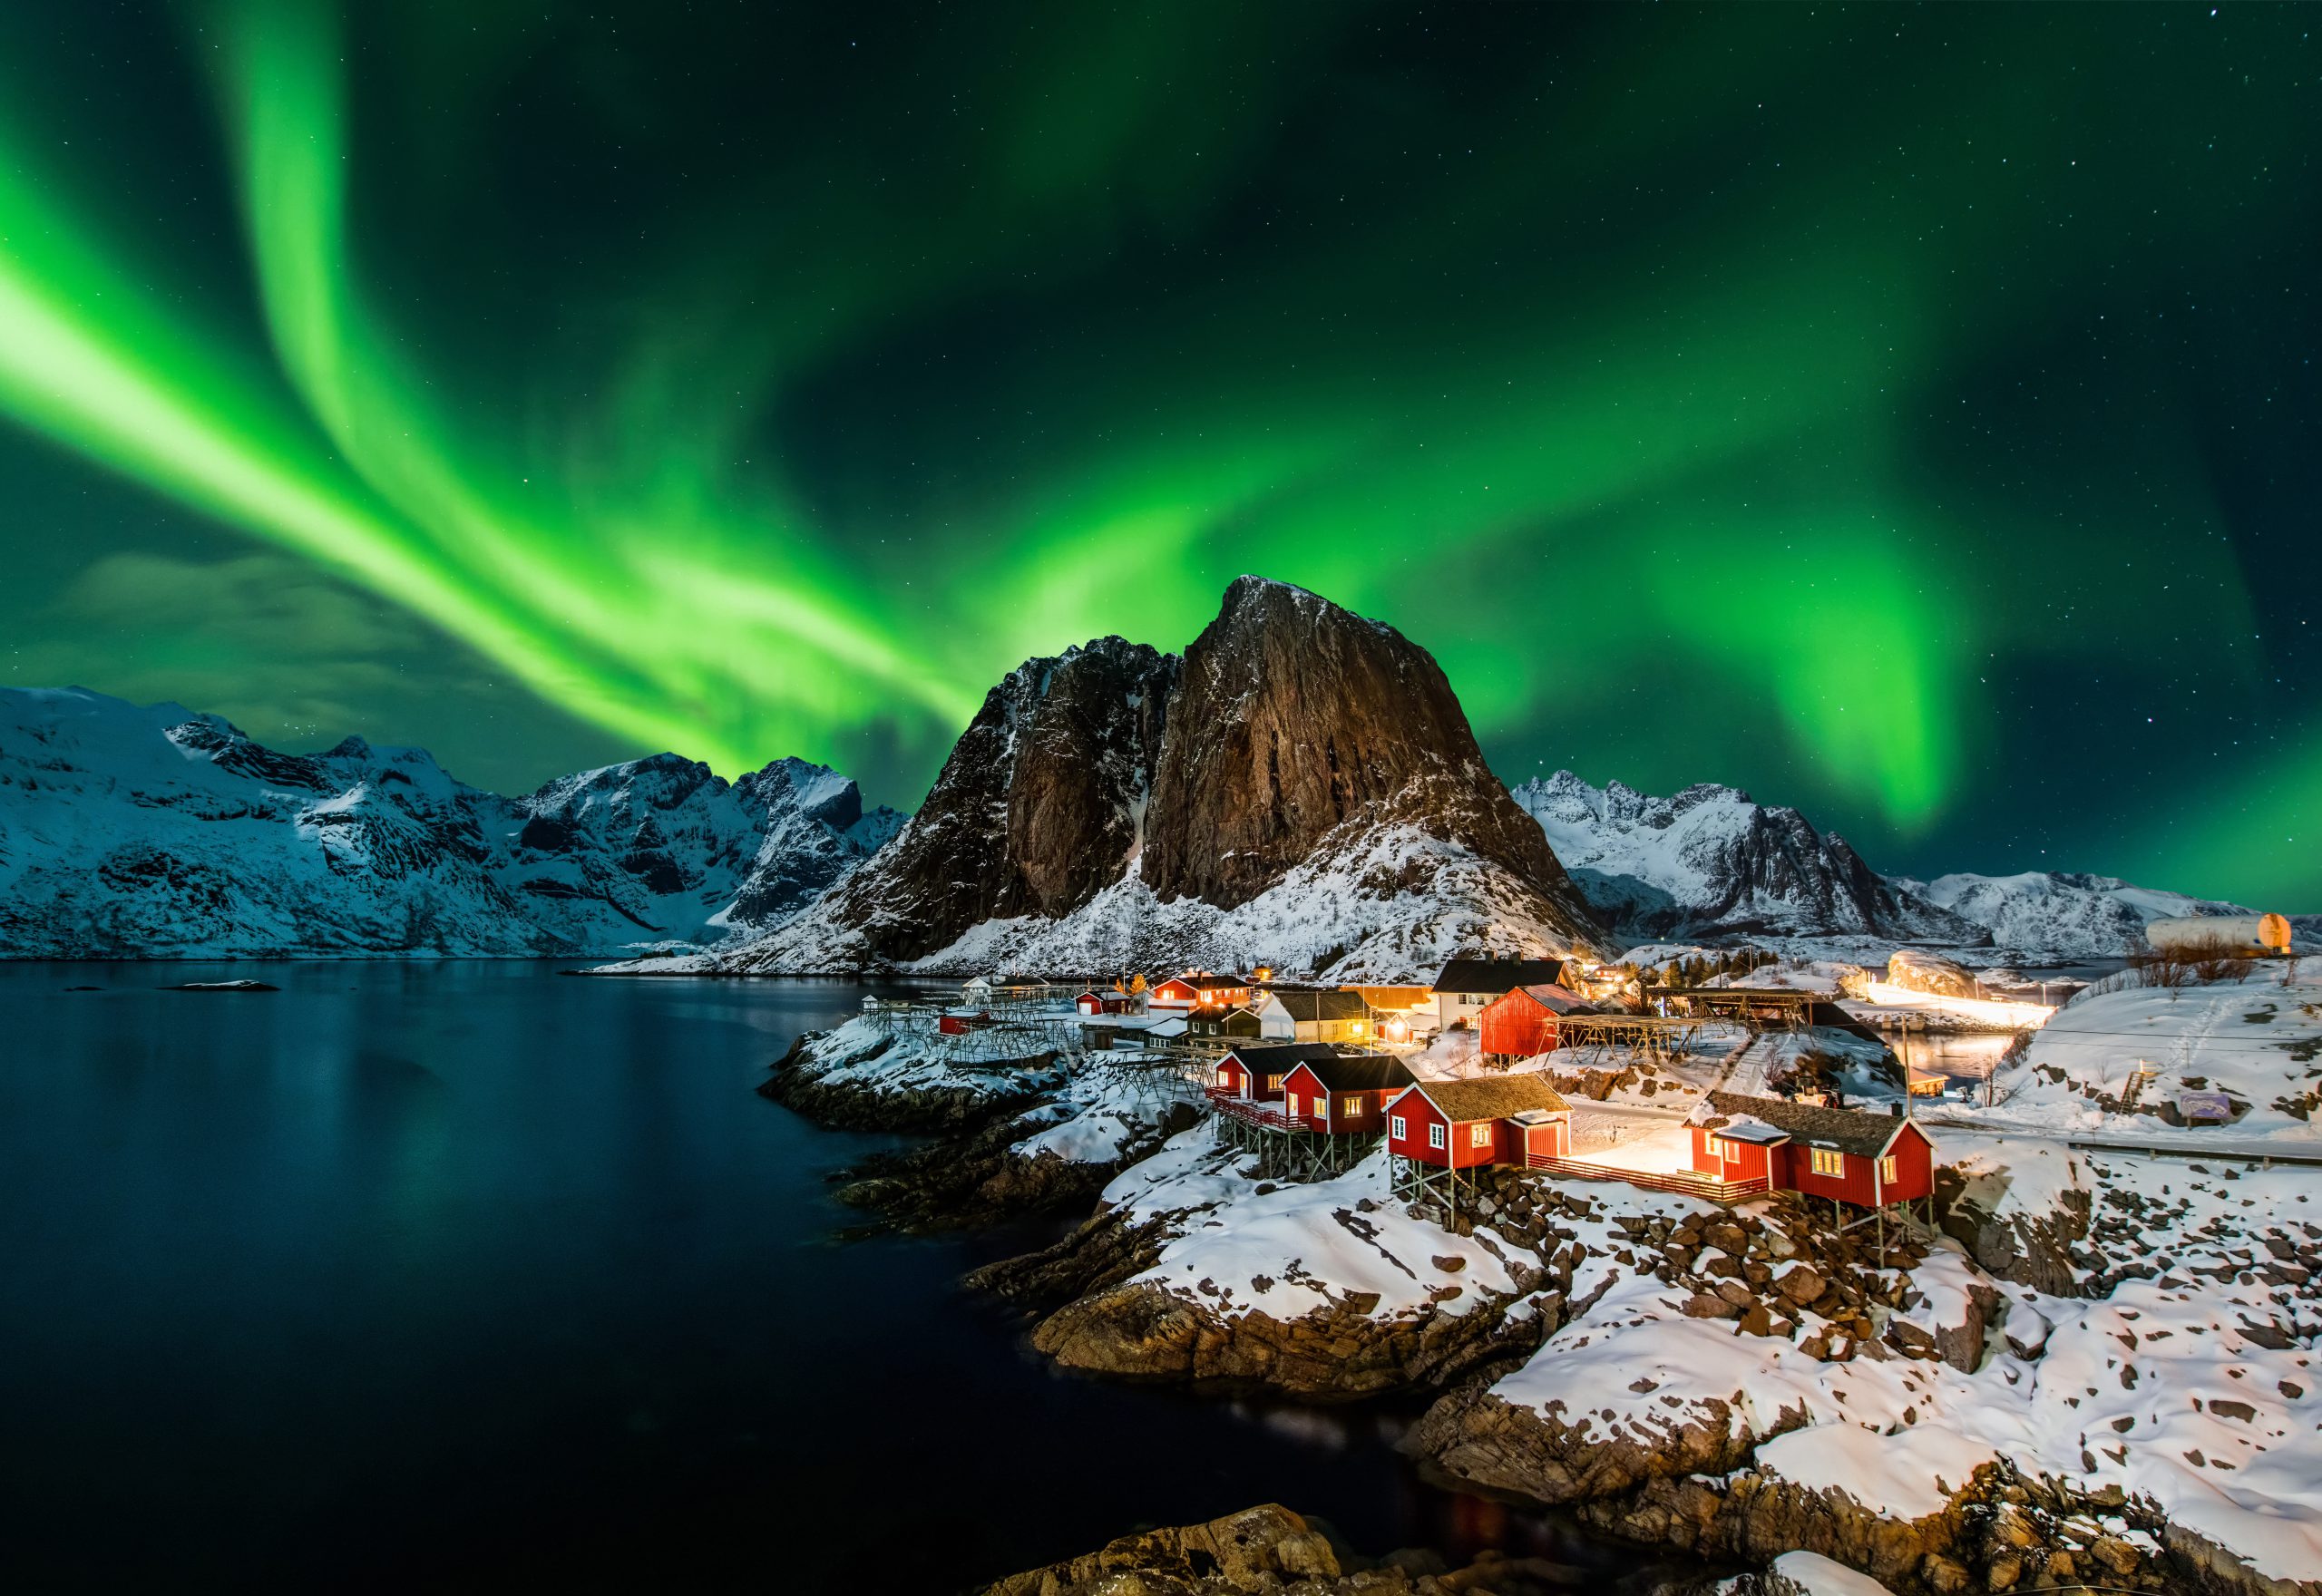 Explore Norway's stunning coastline with Hurtigruten and save 10 per cent